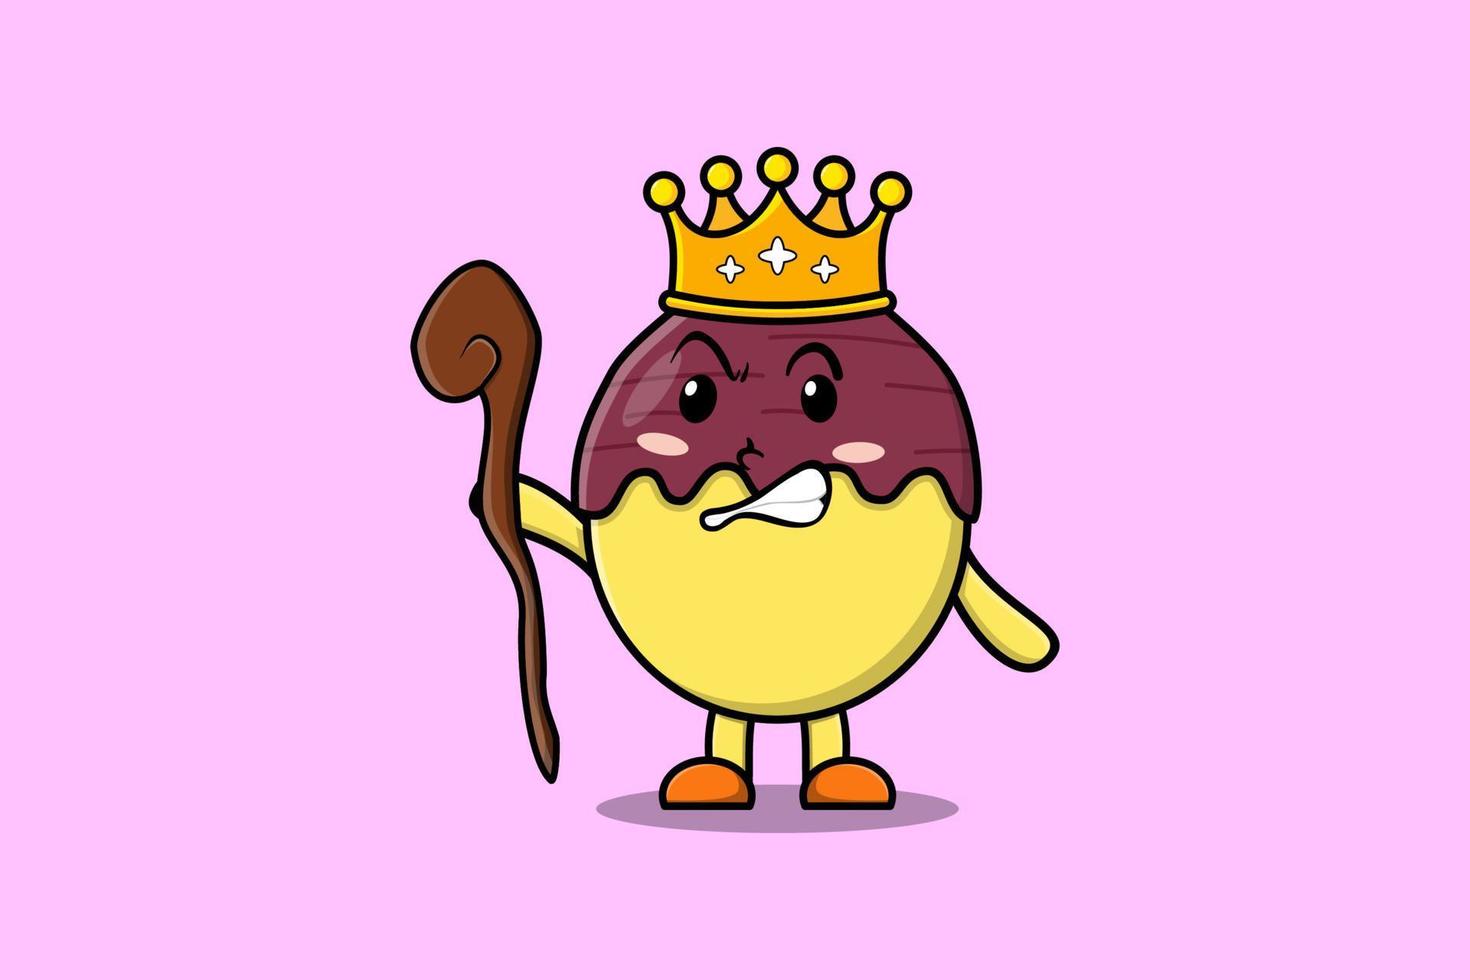 Cute cartoon Sweet potato king with golden crown vector